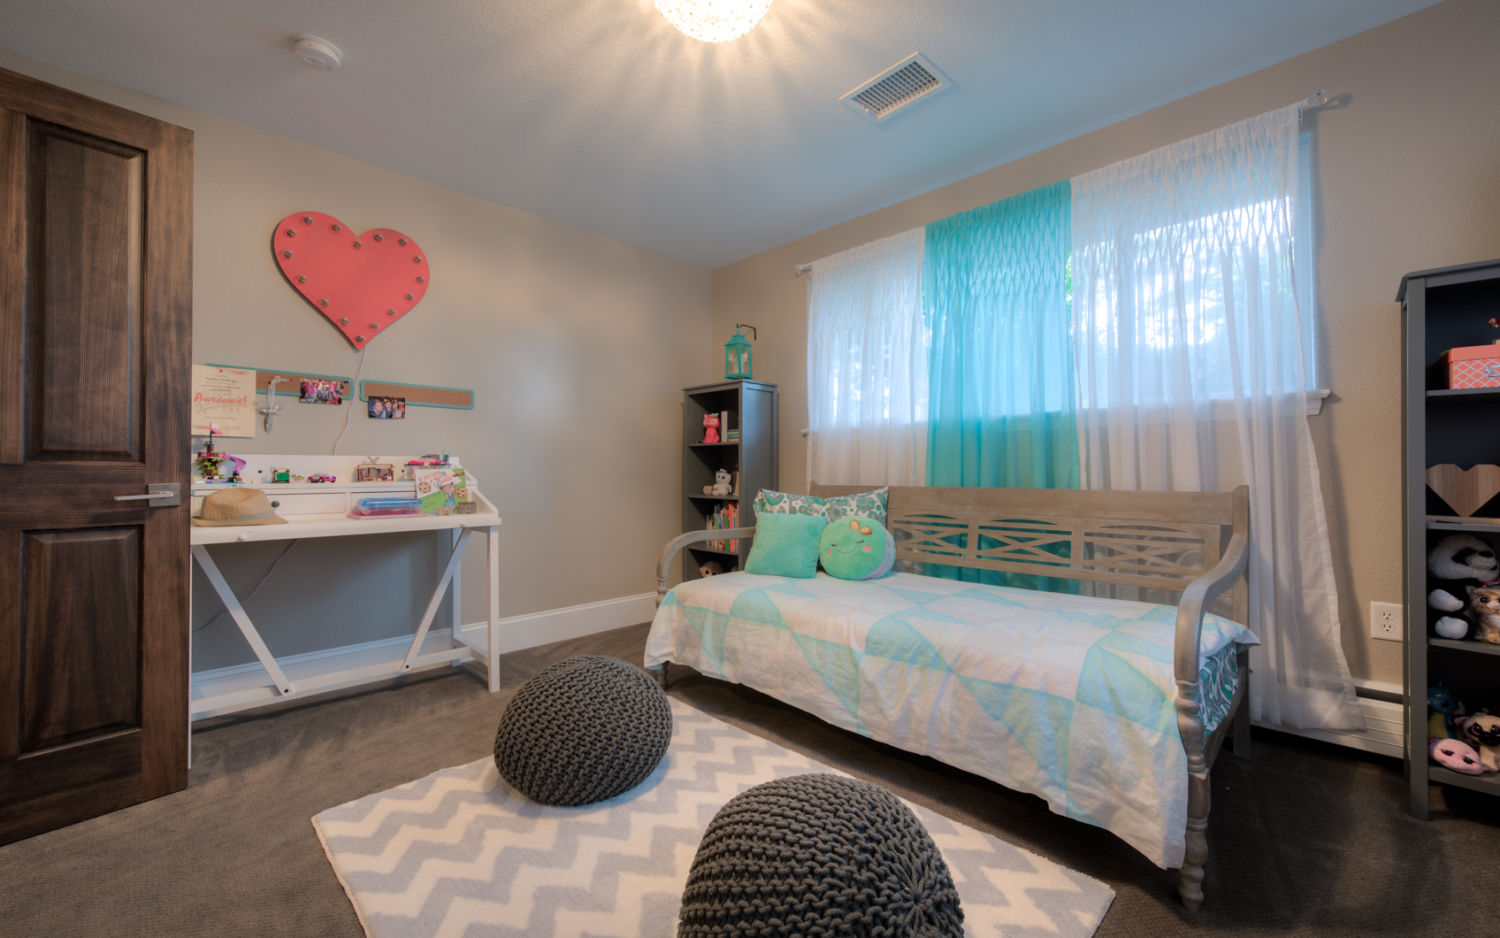 Delicate-design-in-little-girl's-bedroom-custom-home-design